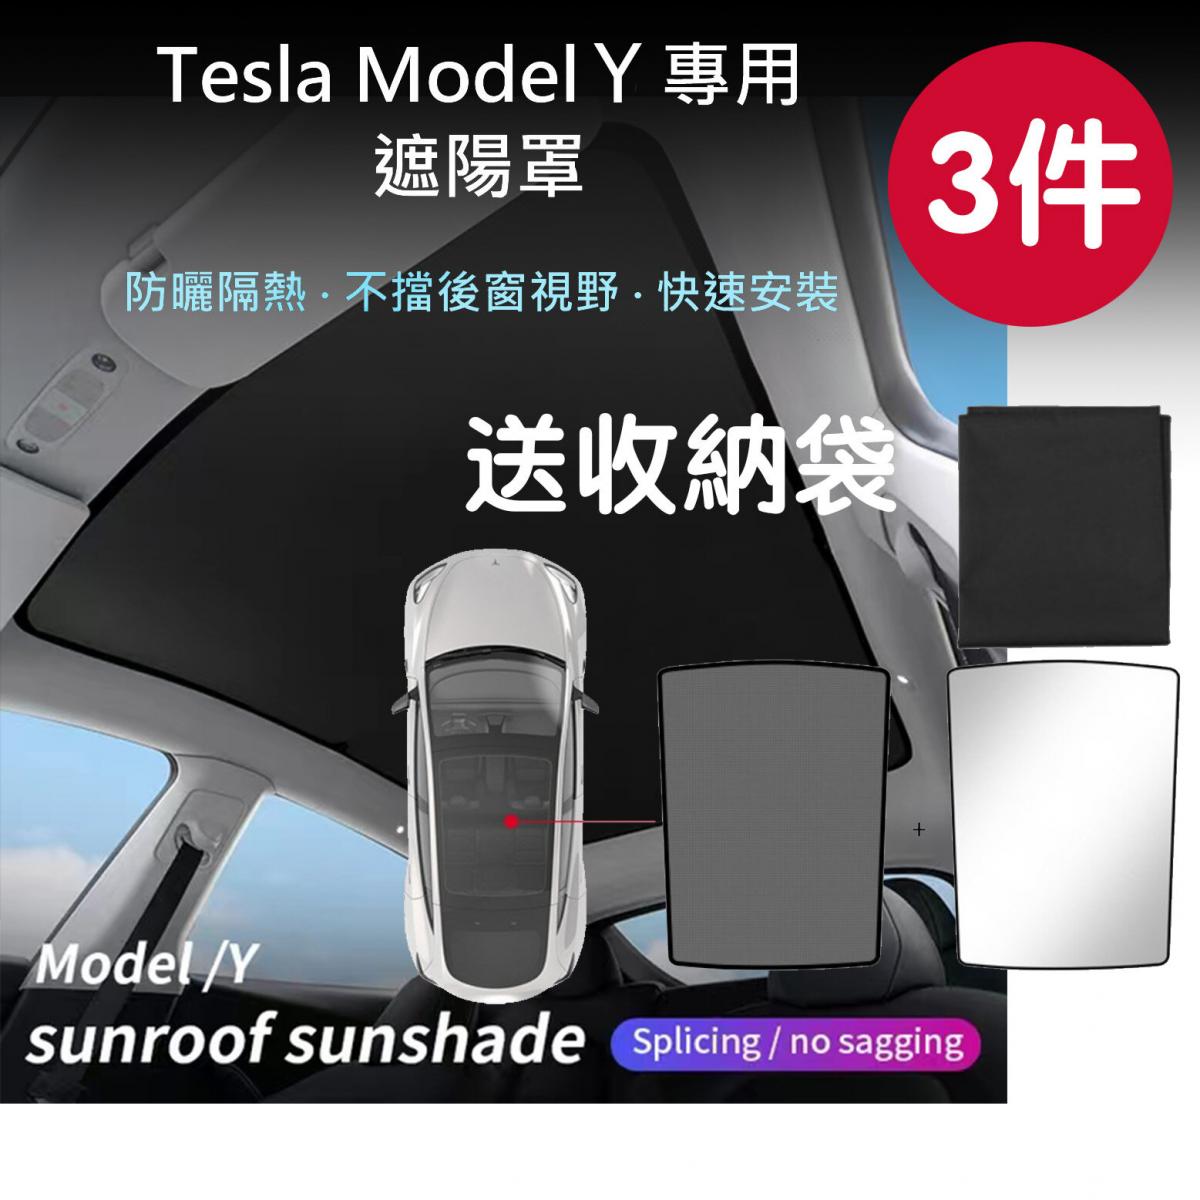 Model Y sunroof sunshade net - Model Y sunroof full sunshade set sun shield